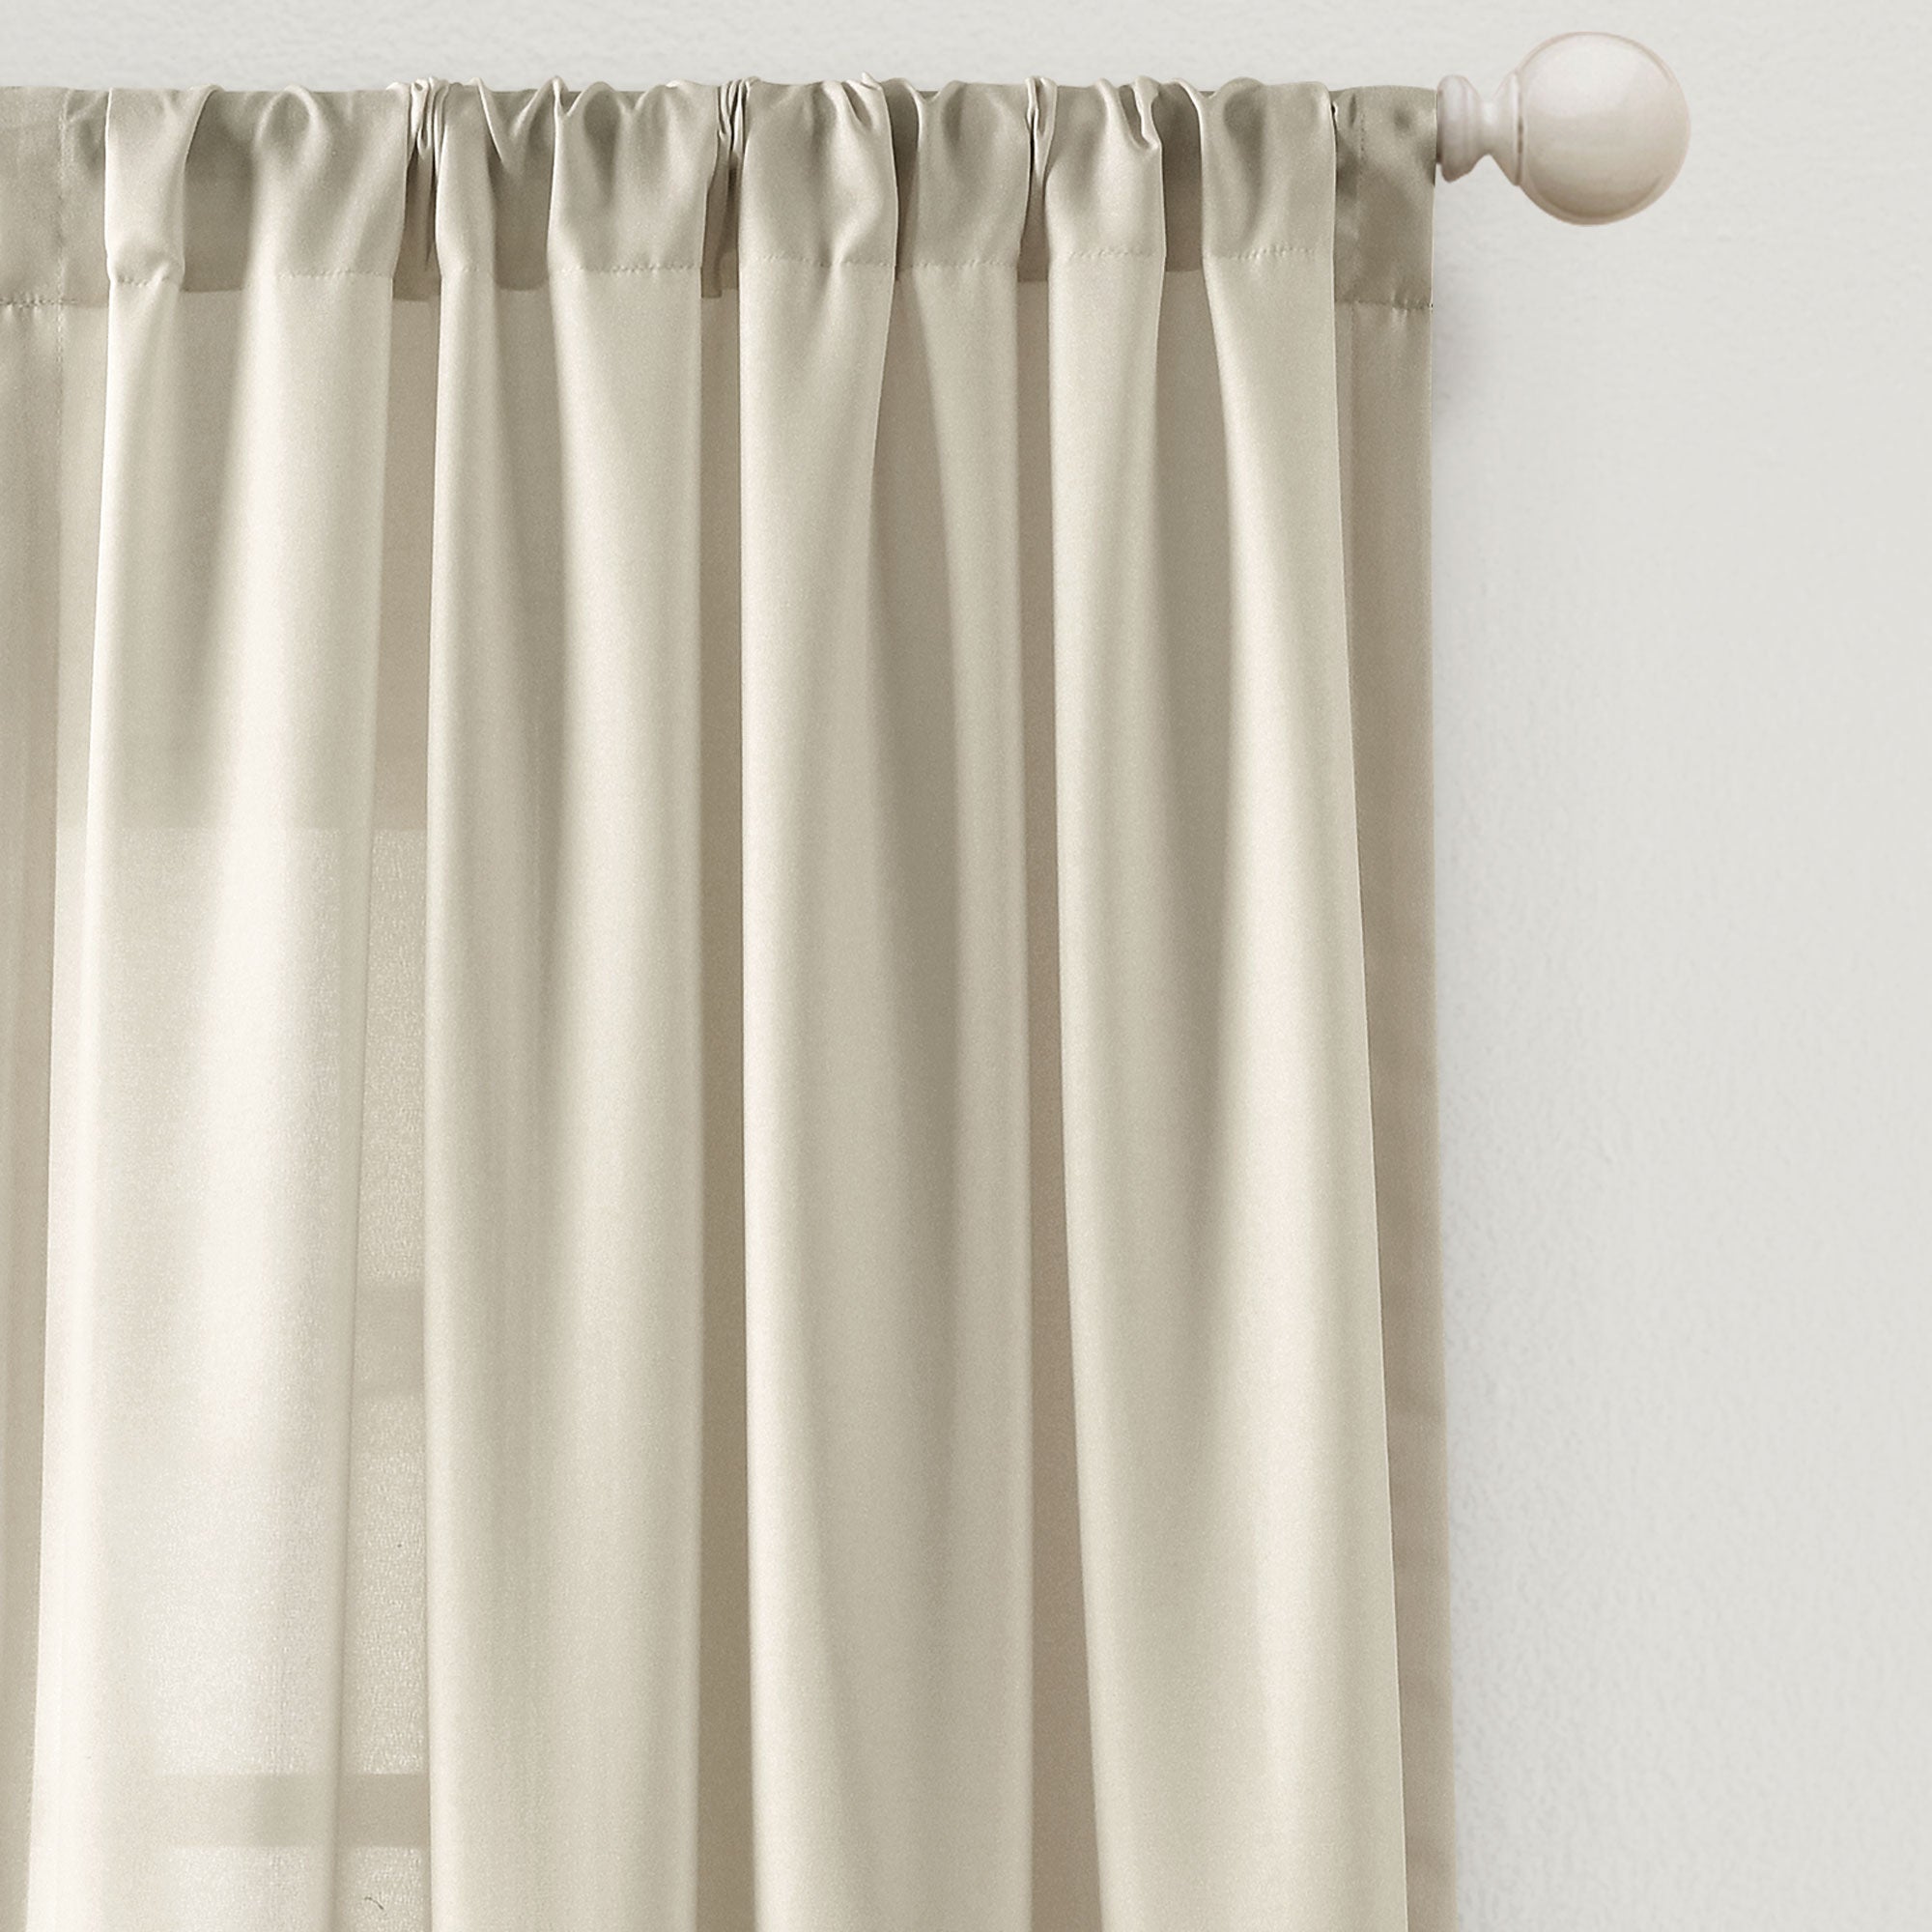 Tulle Skirt Solid Window Curtain Panel Set